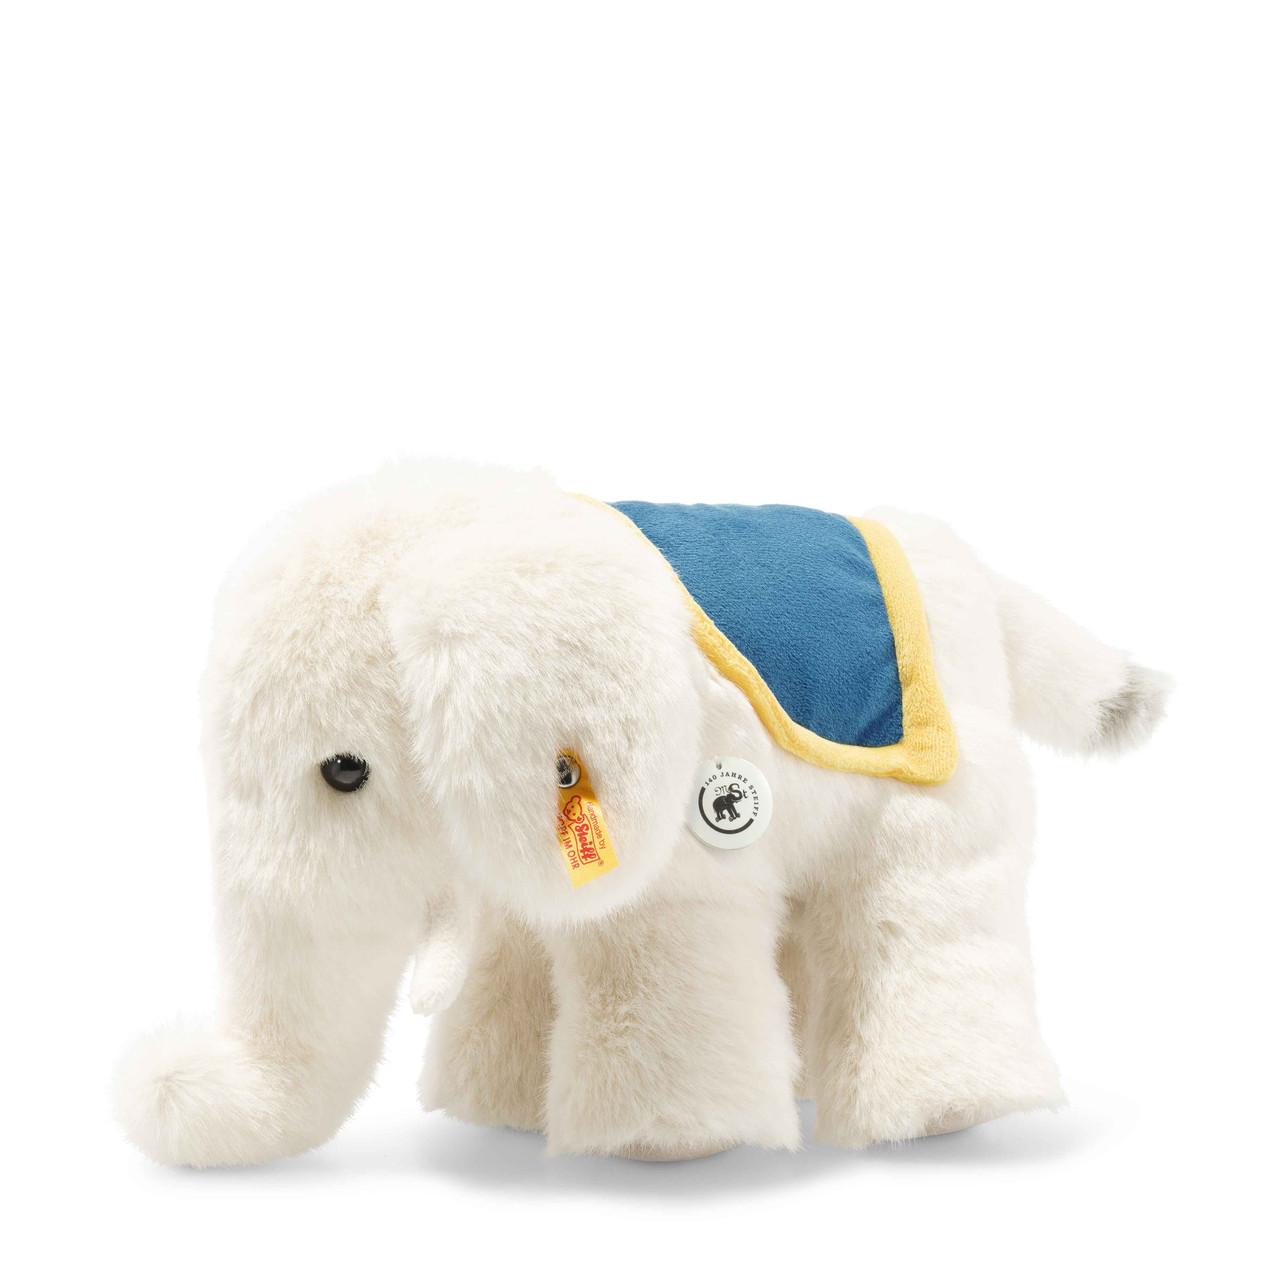 little stuffed elephant